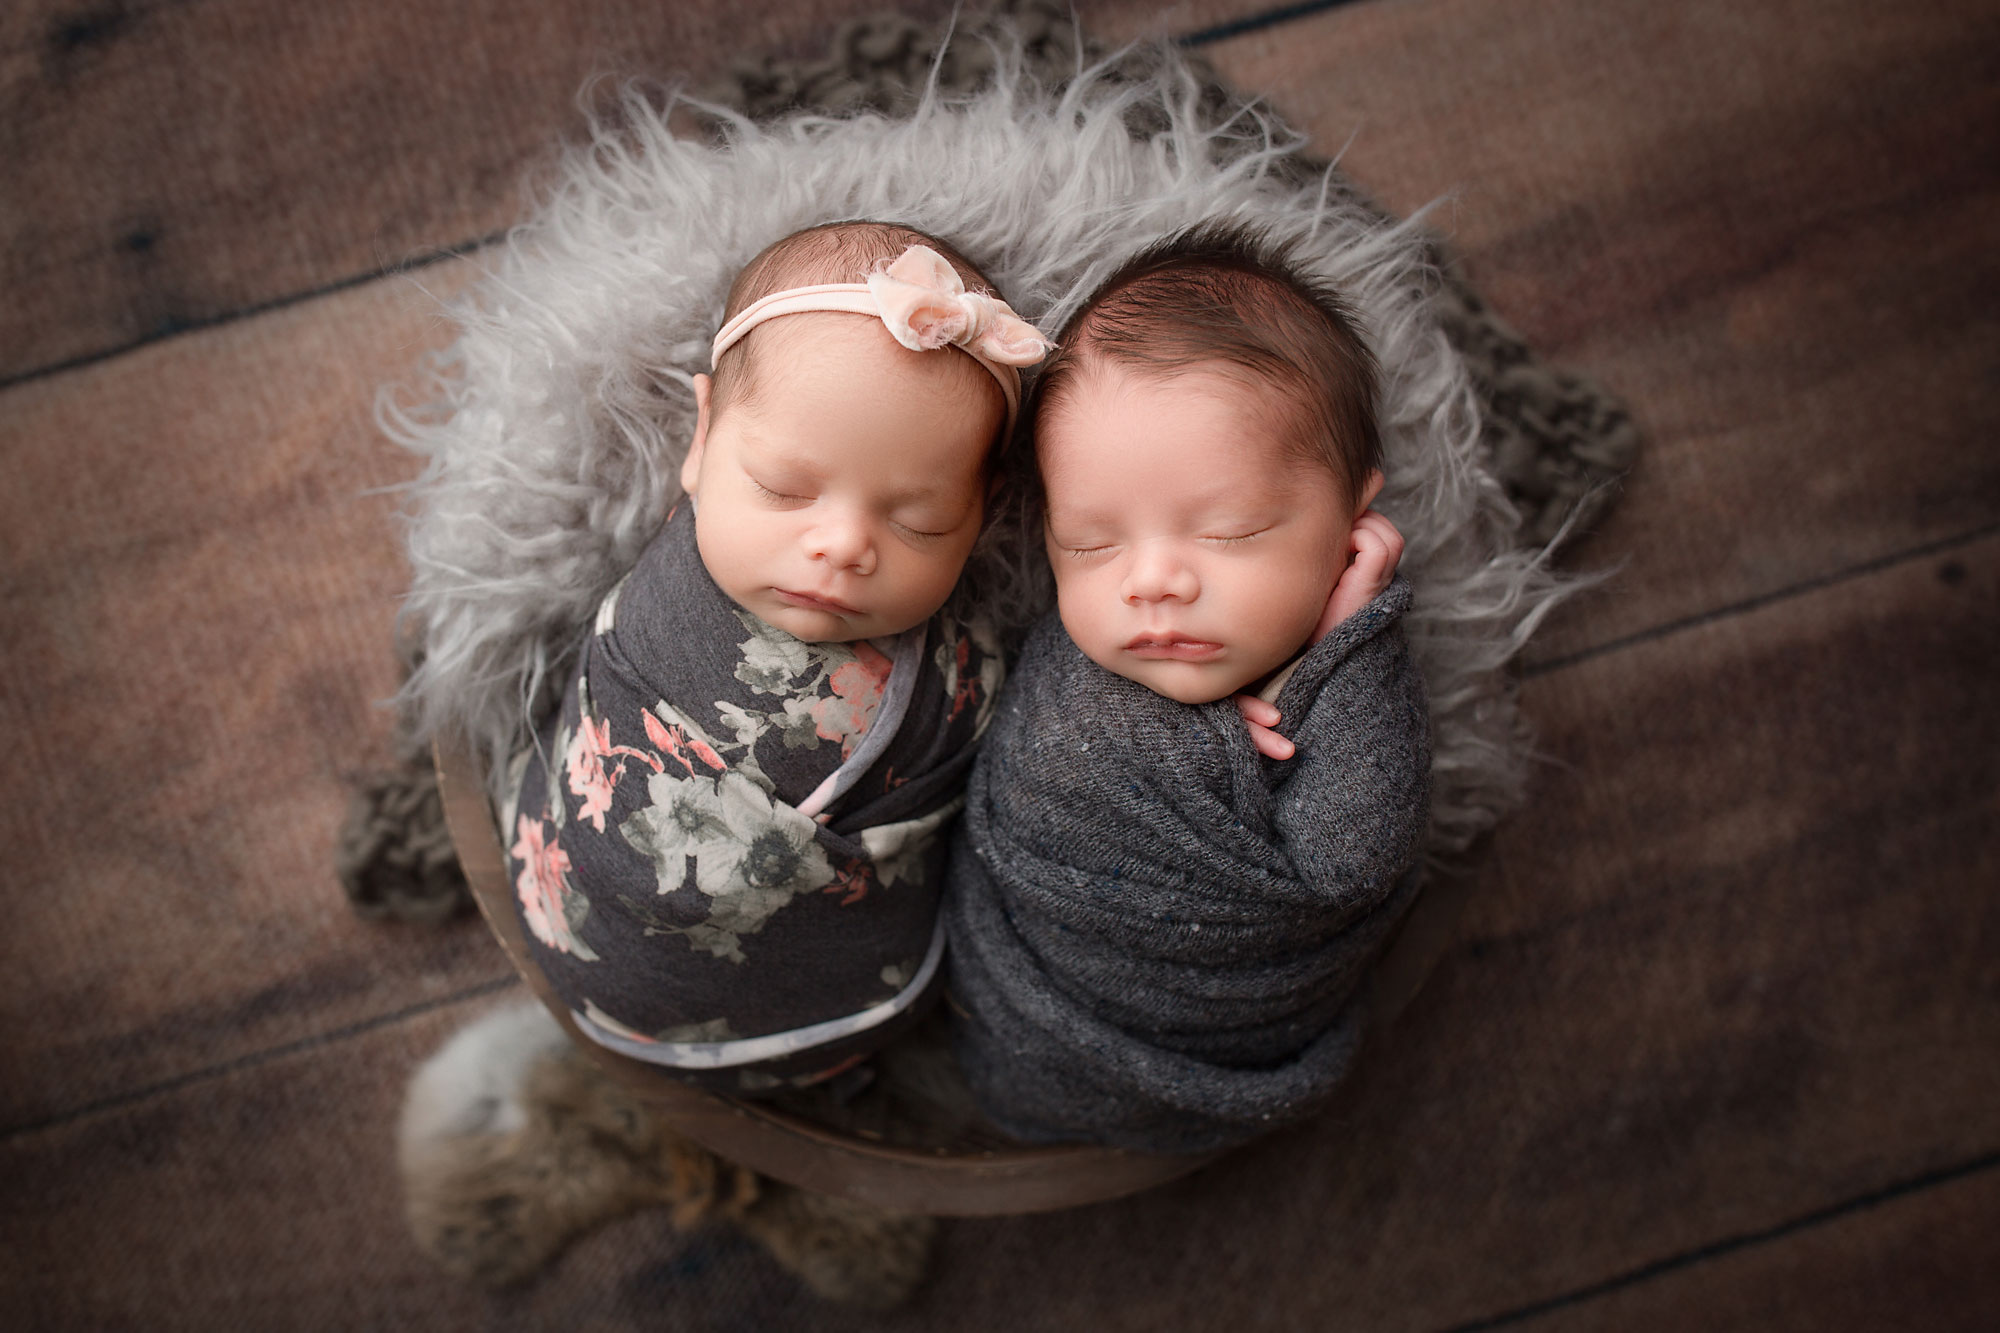 hunterdon county nj newborn sessions. twins sleeping together